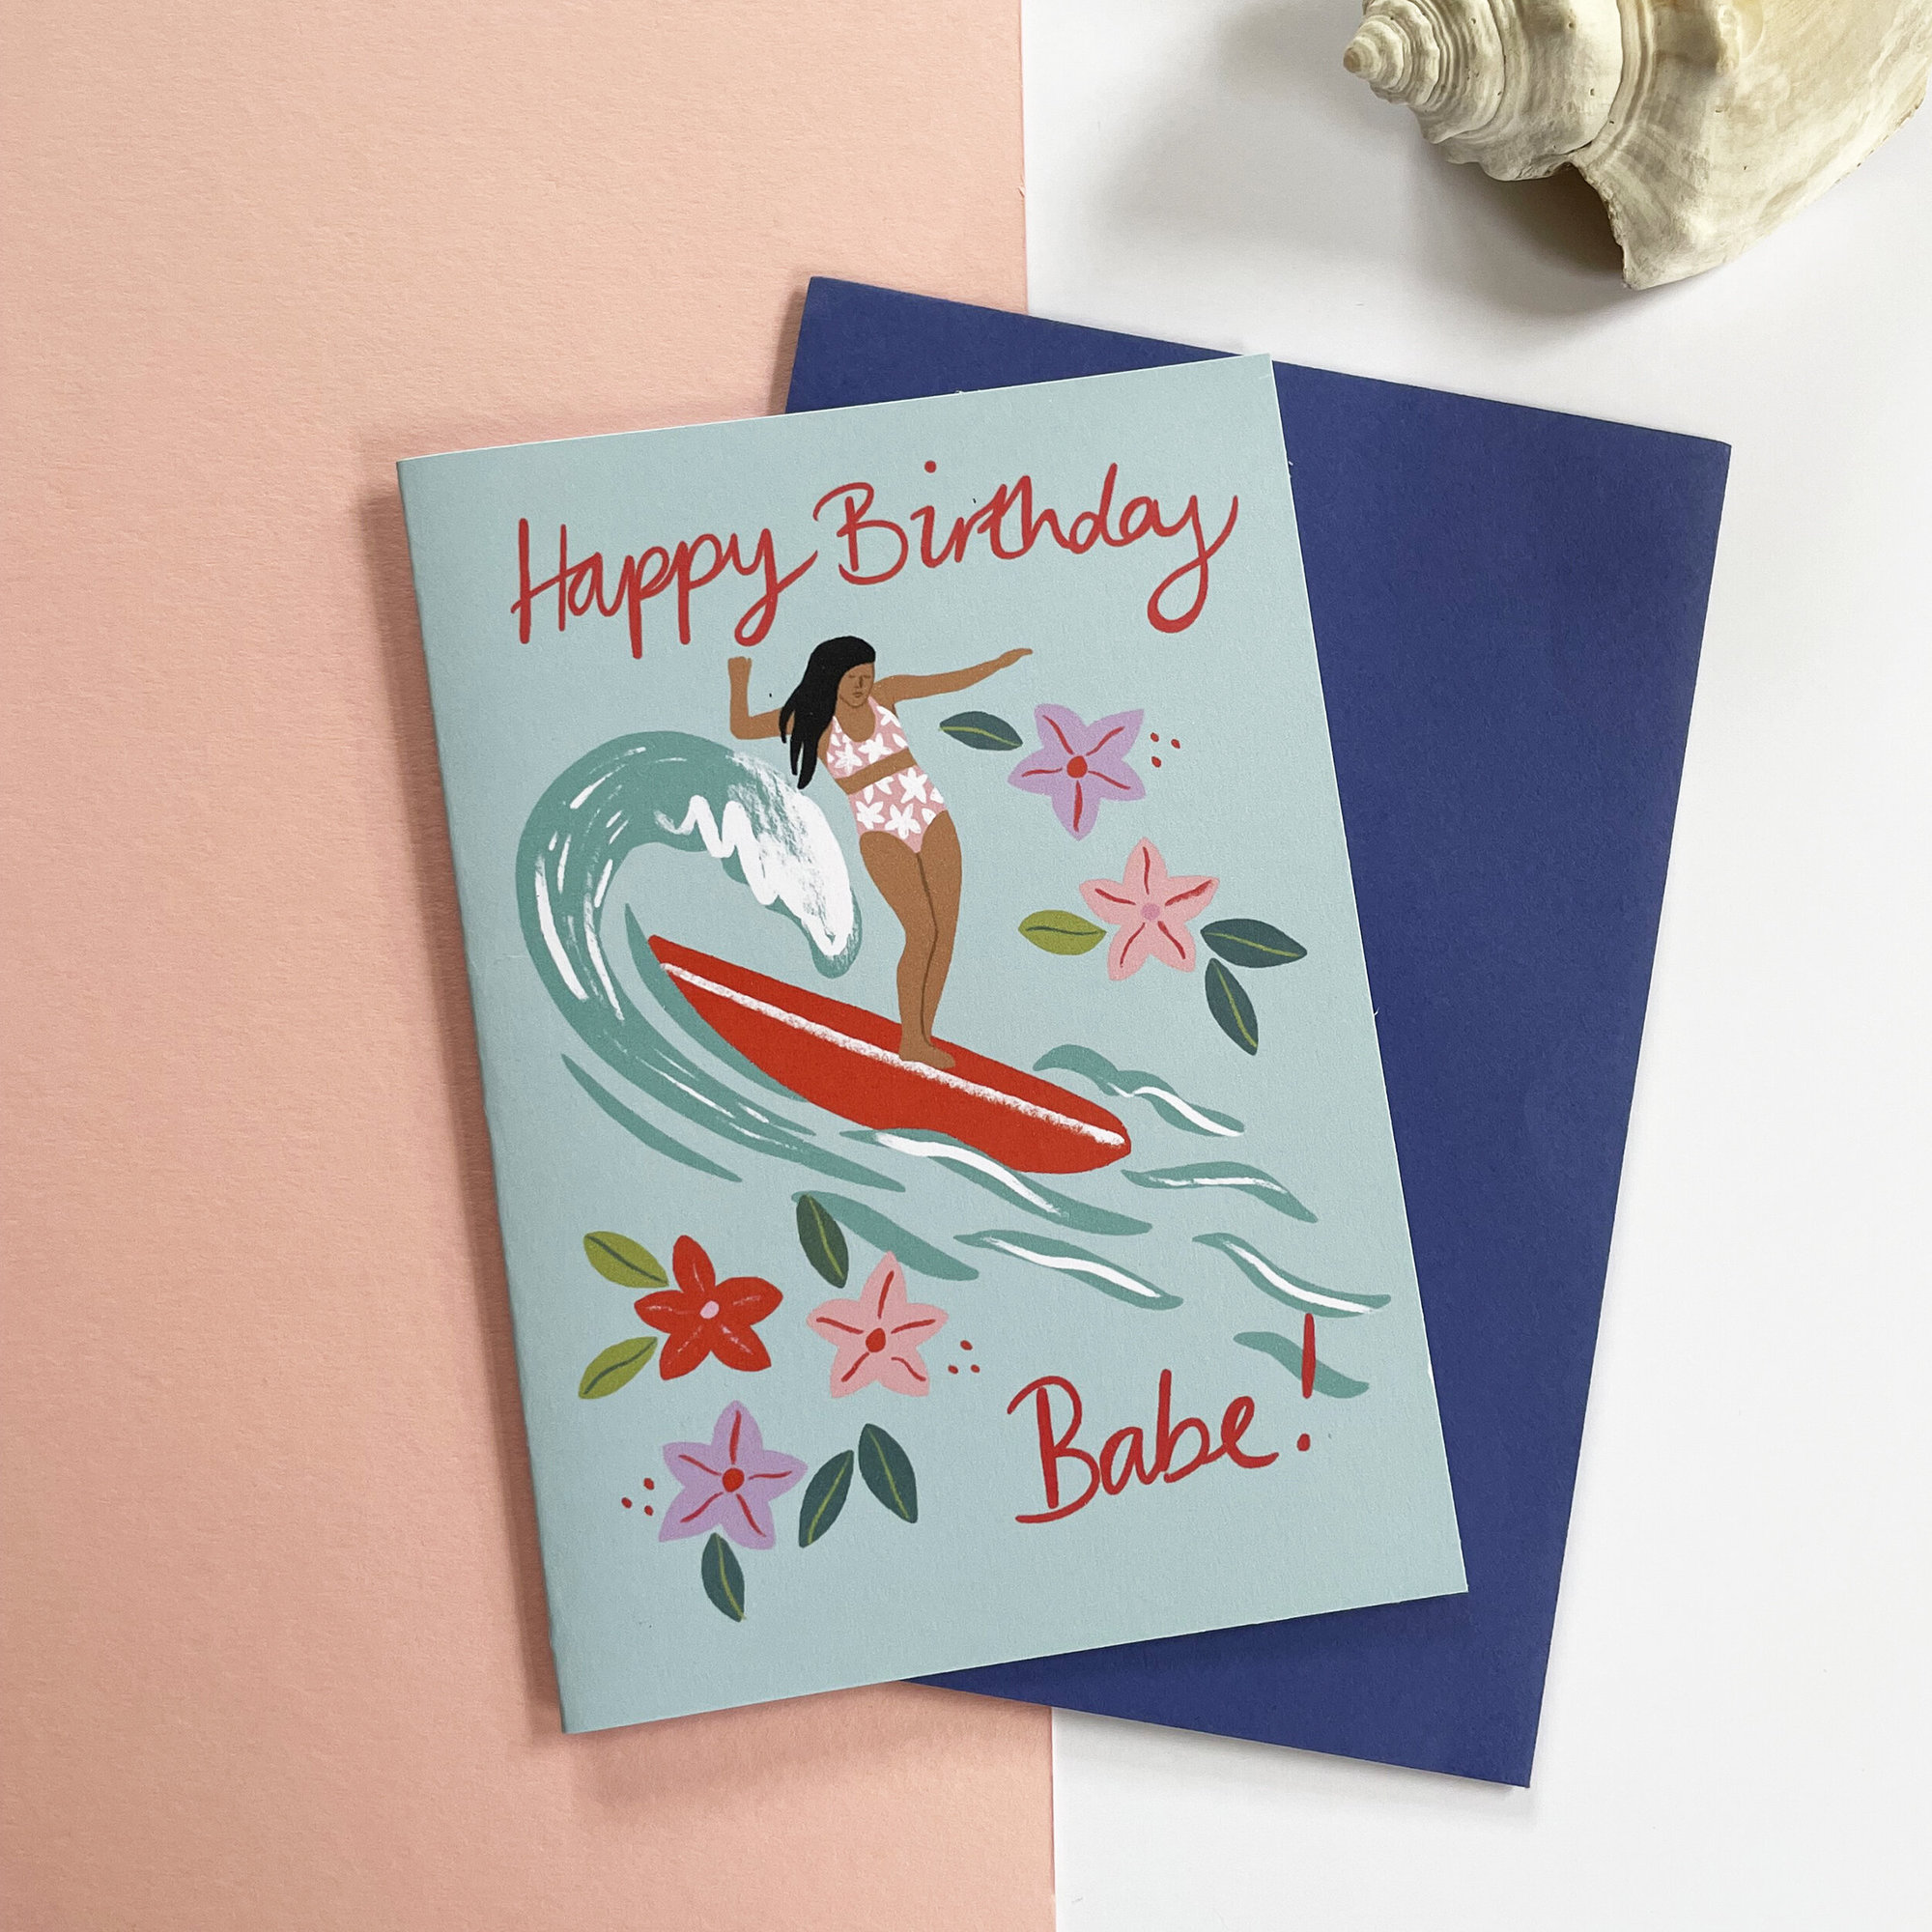 'happy Birthday Babe!'
Surfer Girl Card